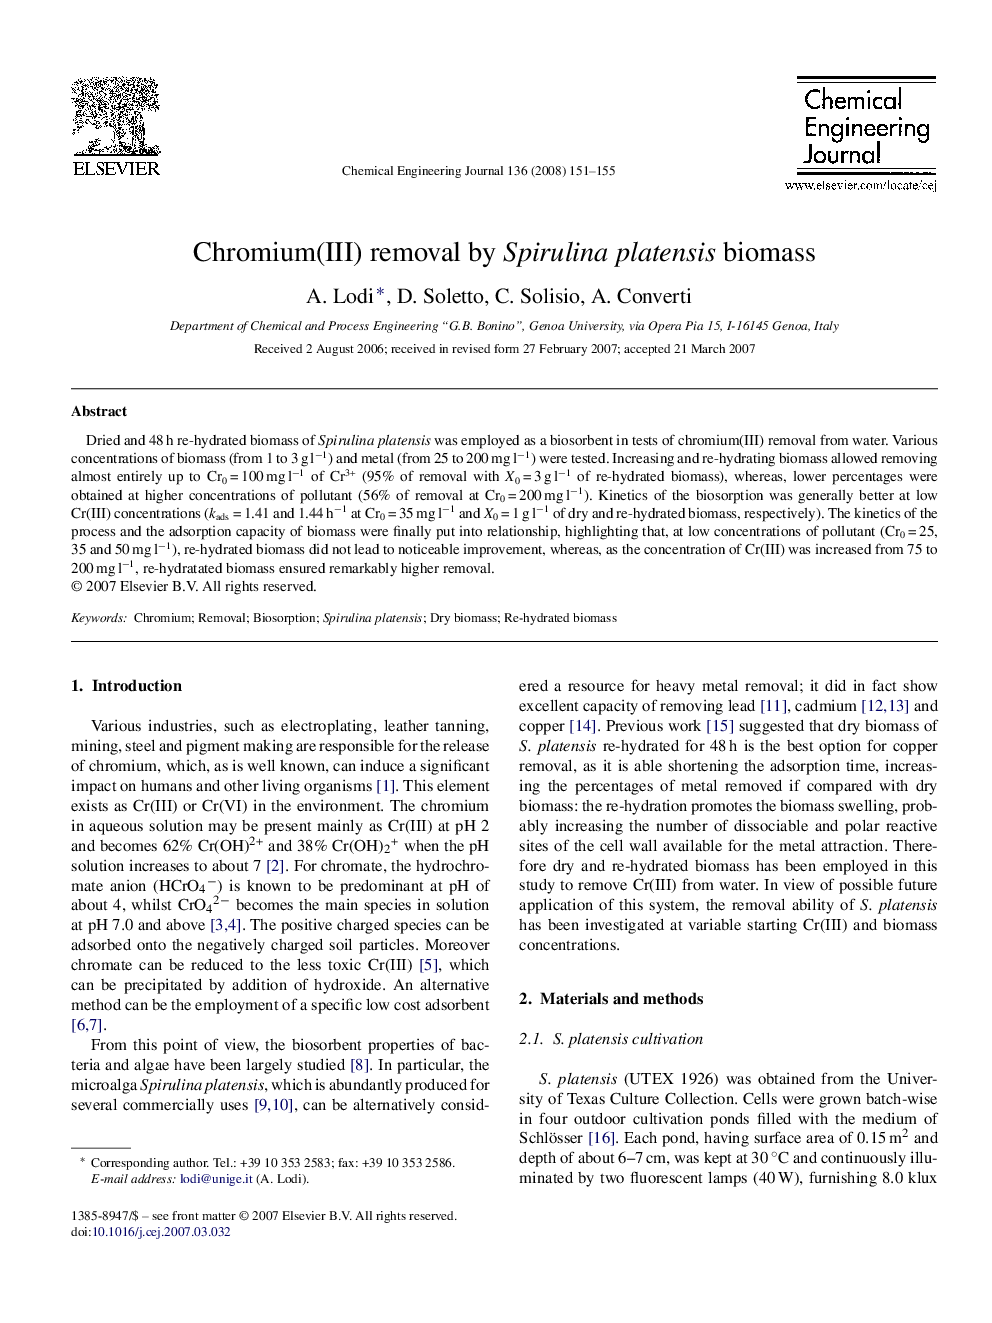 Chromium(III) removal by Spirulina platensis biomass